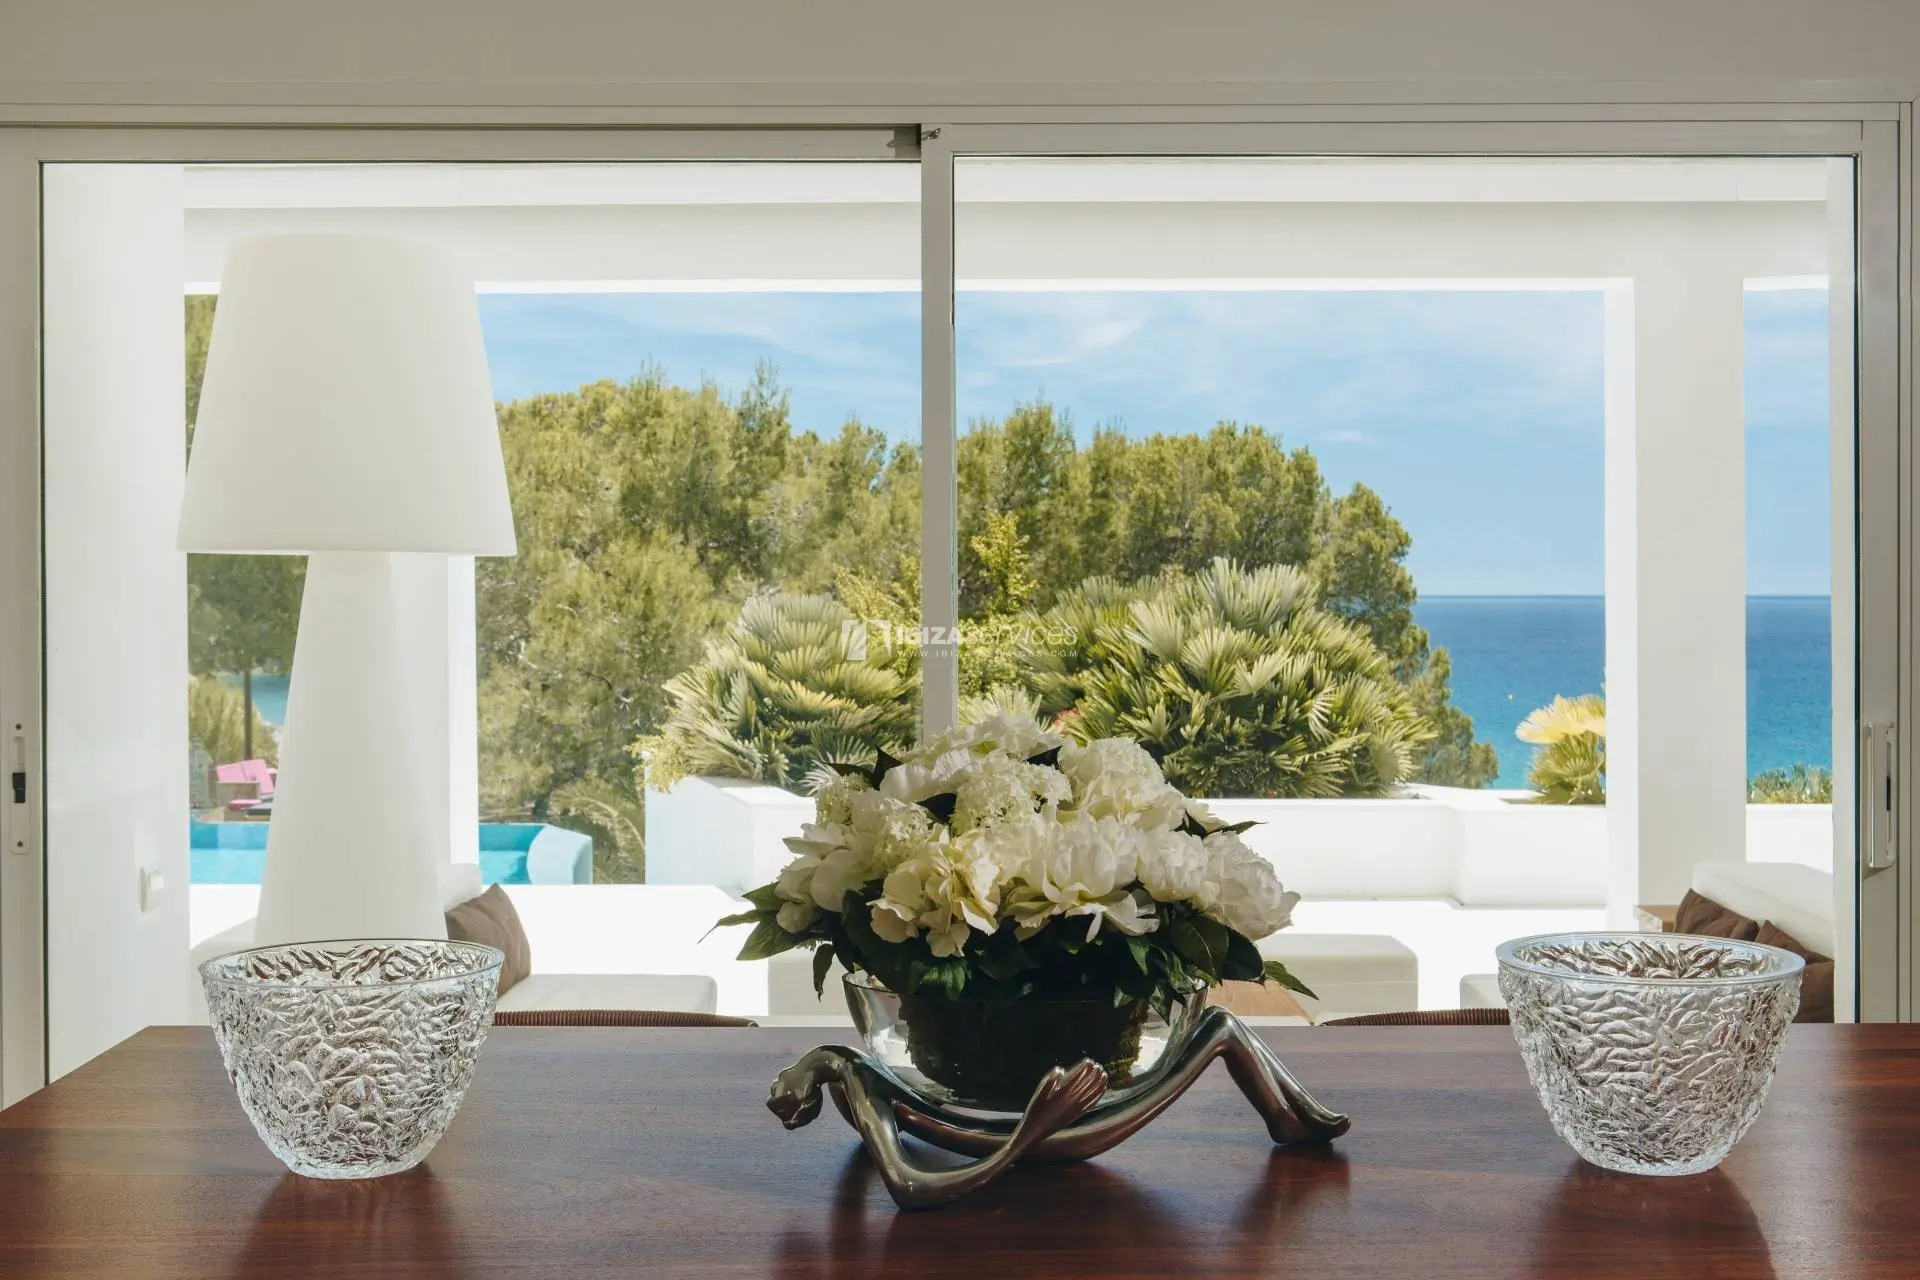 Cala Jondal moderna casa de 4 dormitorios en alquiler para vacaciones en Ibiza